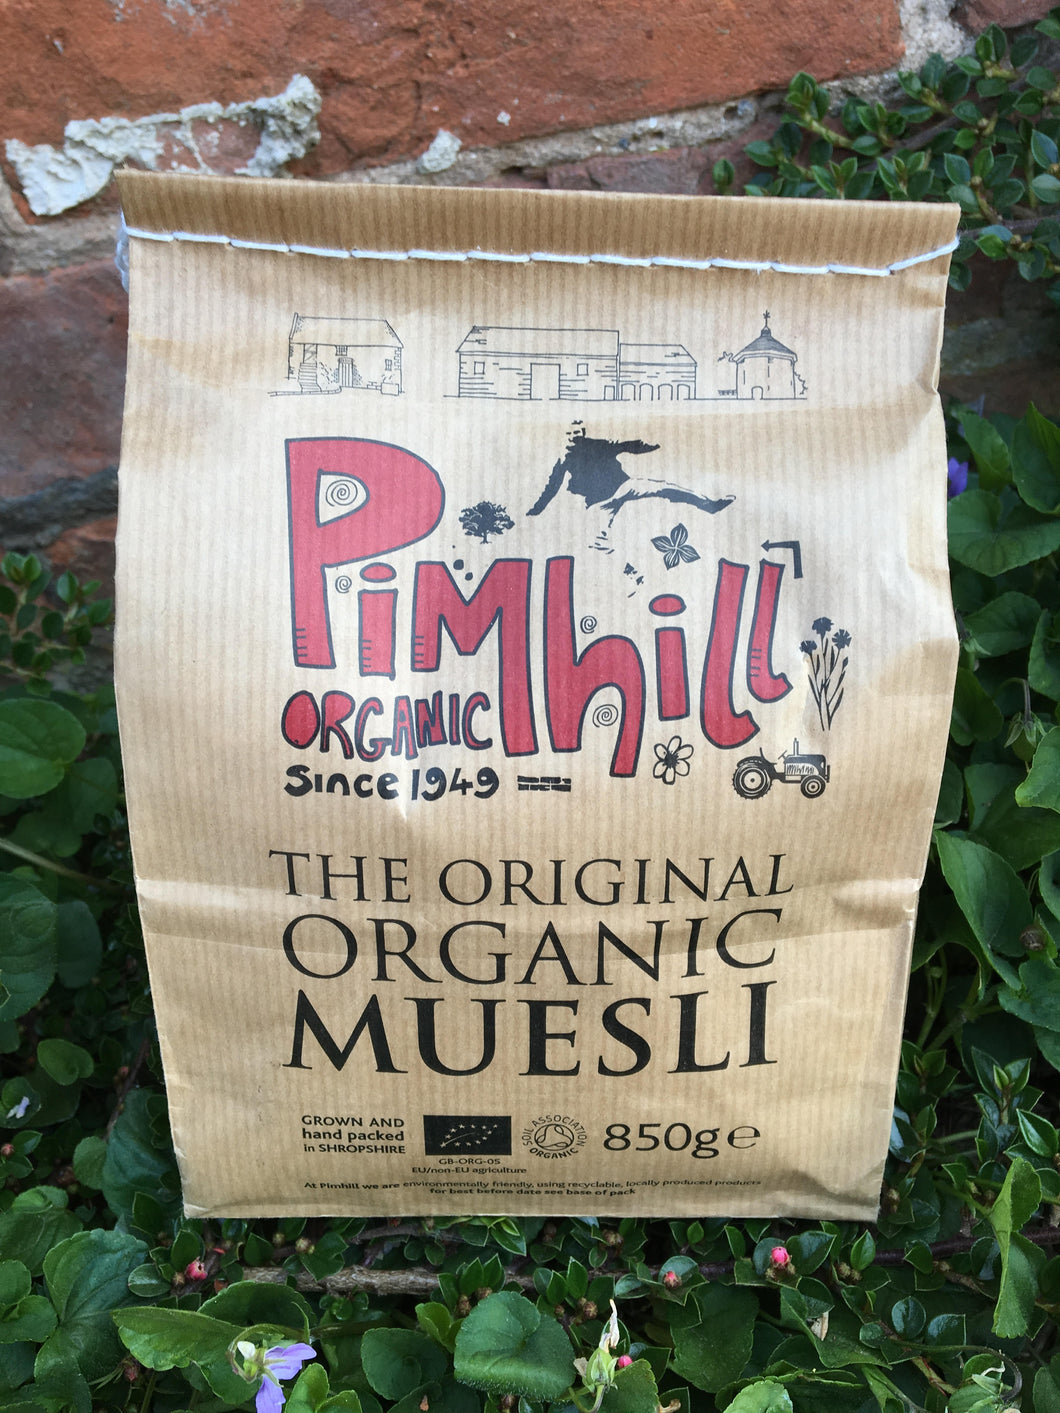 Pimhill Organic Muesli 850g